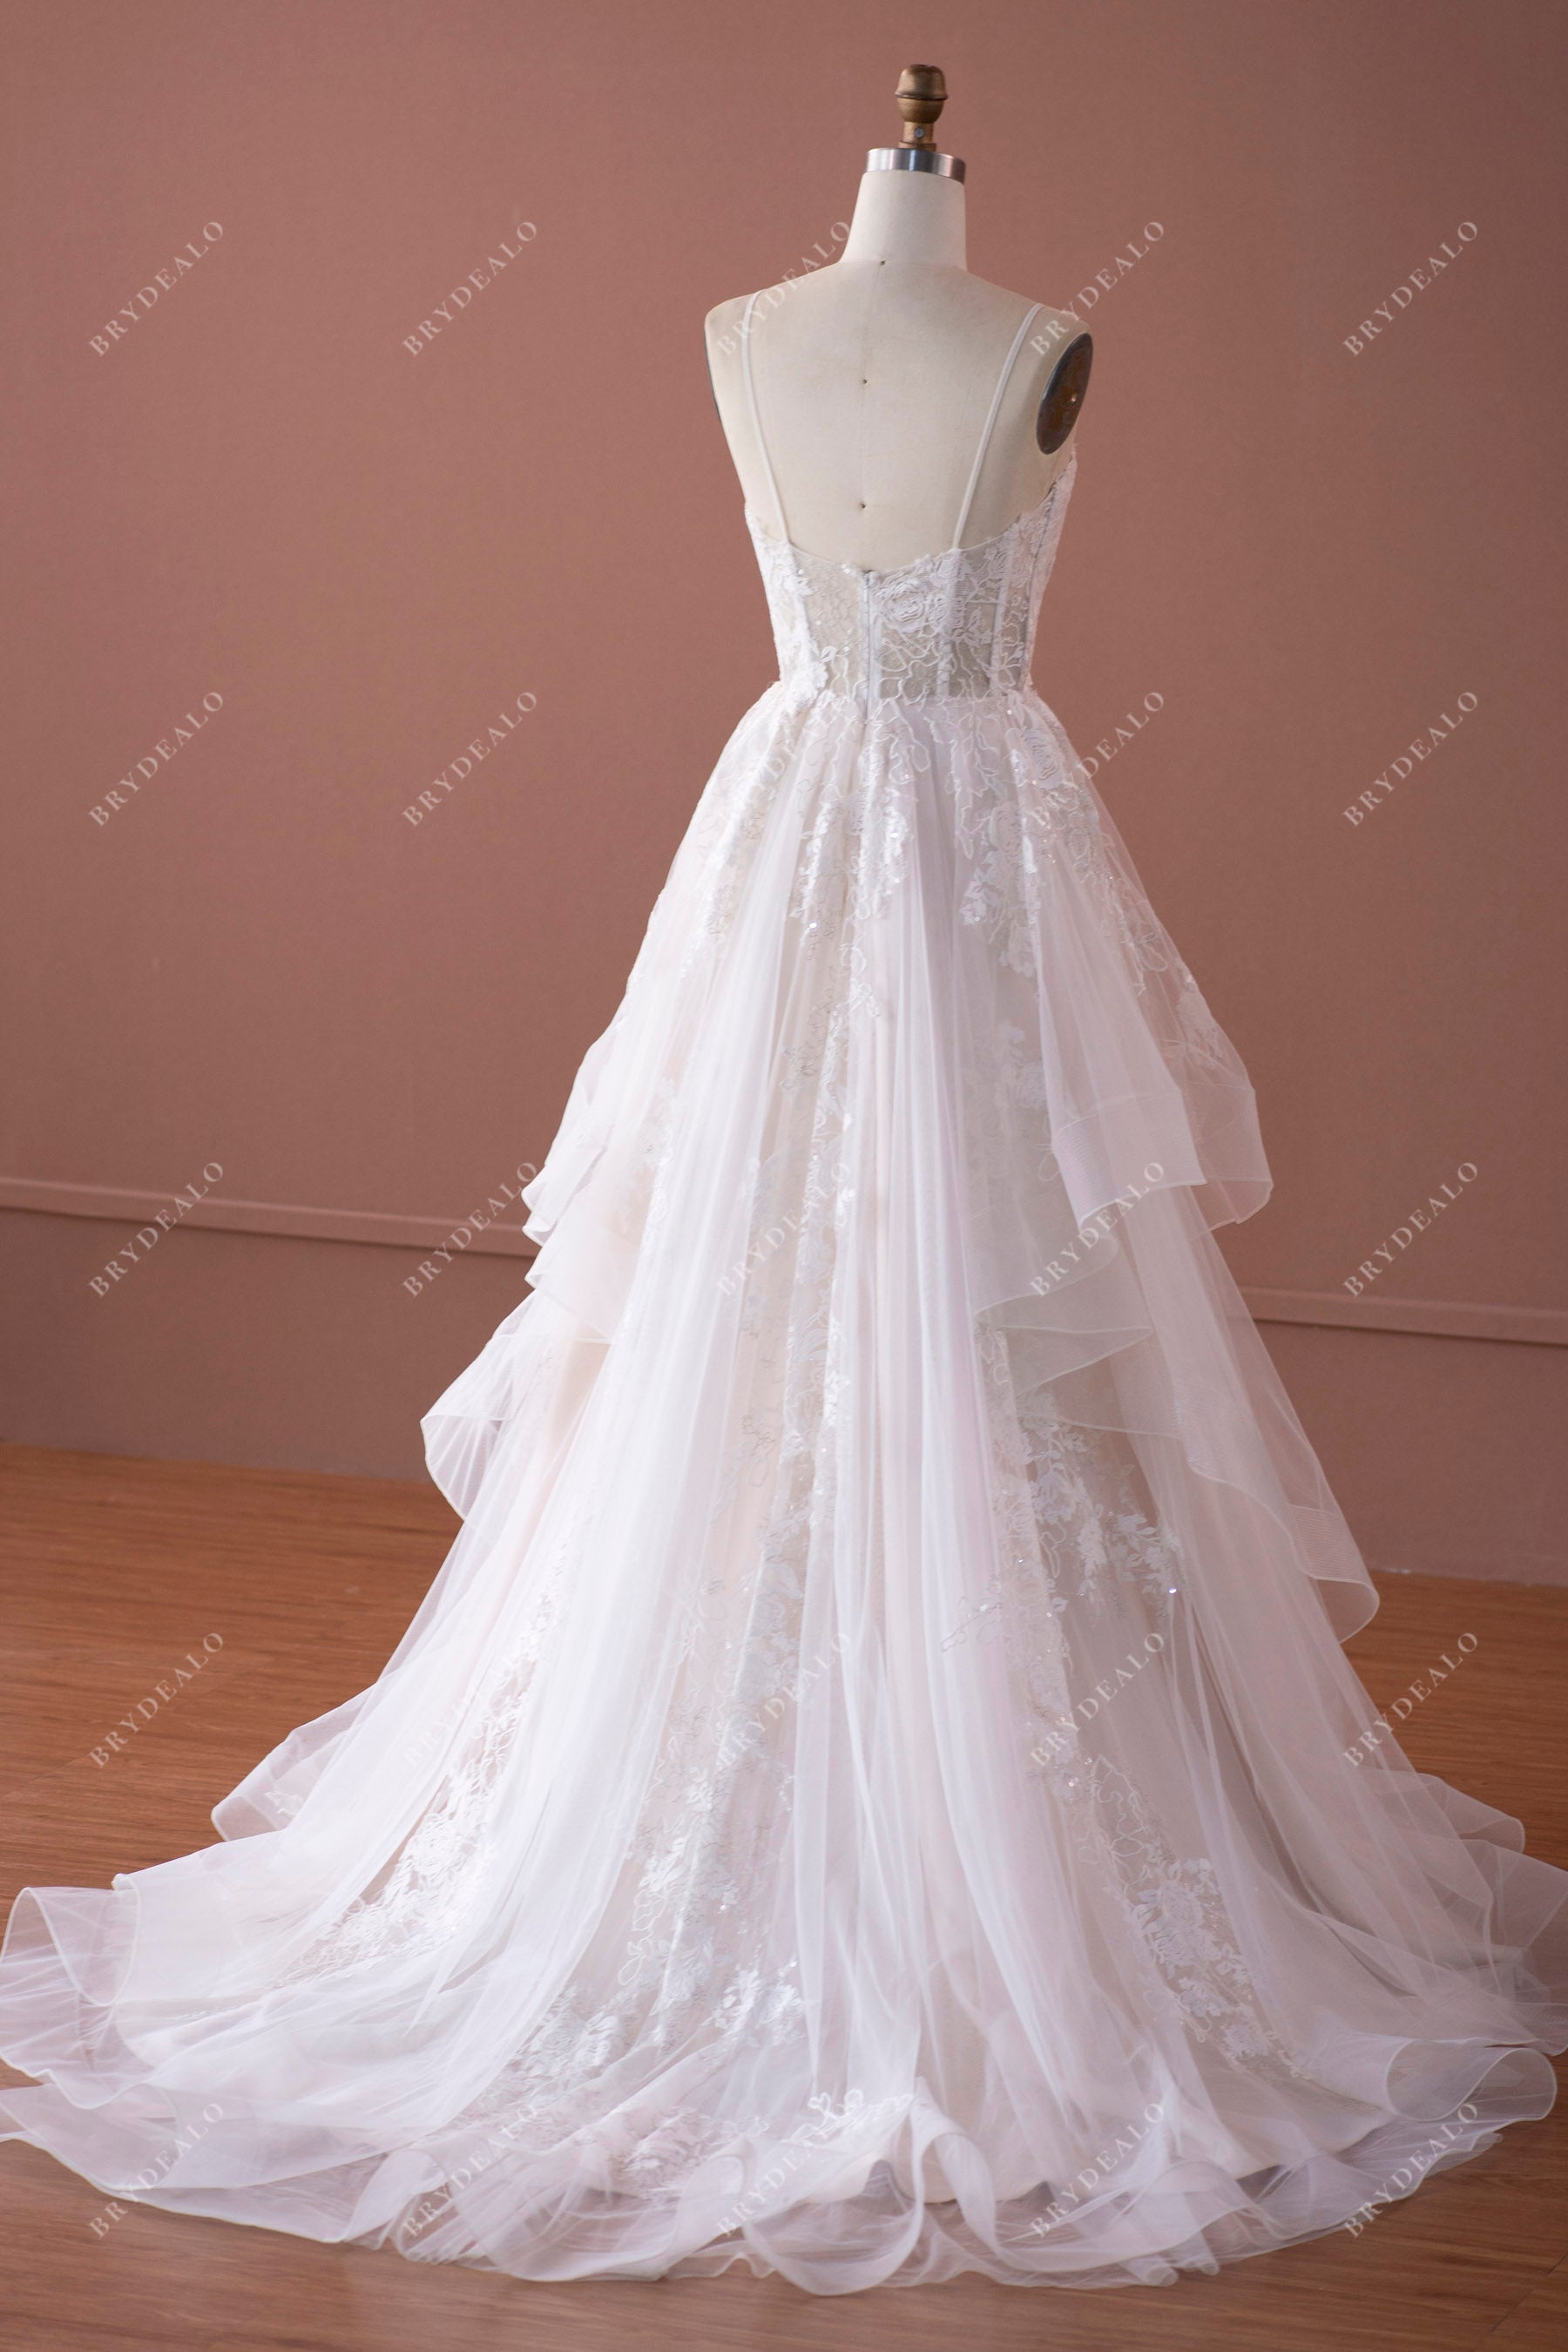 Illusion Back Lace Tulle Flounce A-line Wedding Dress